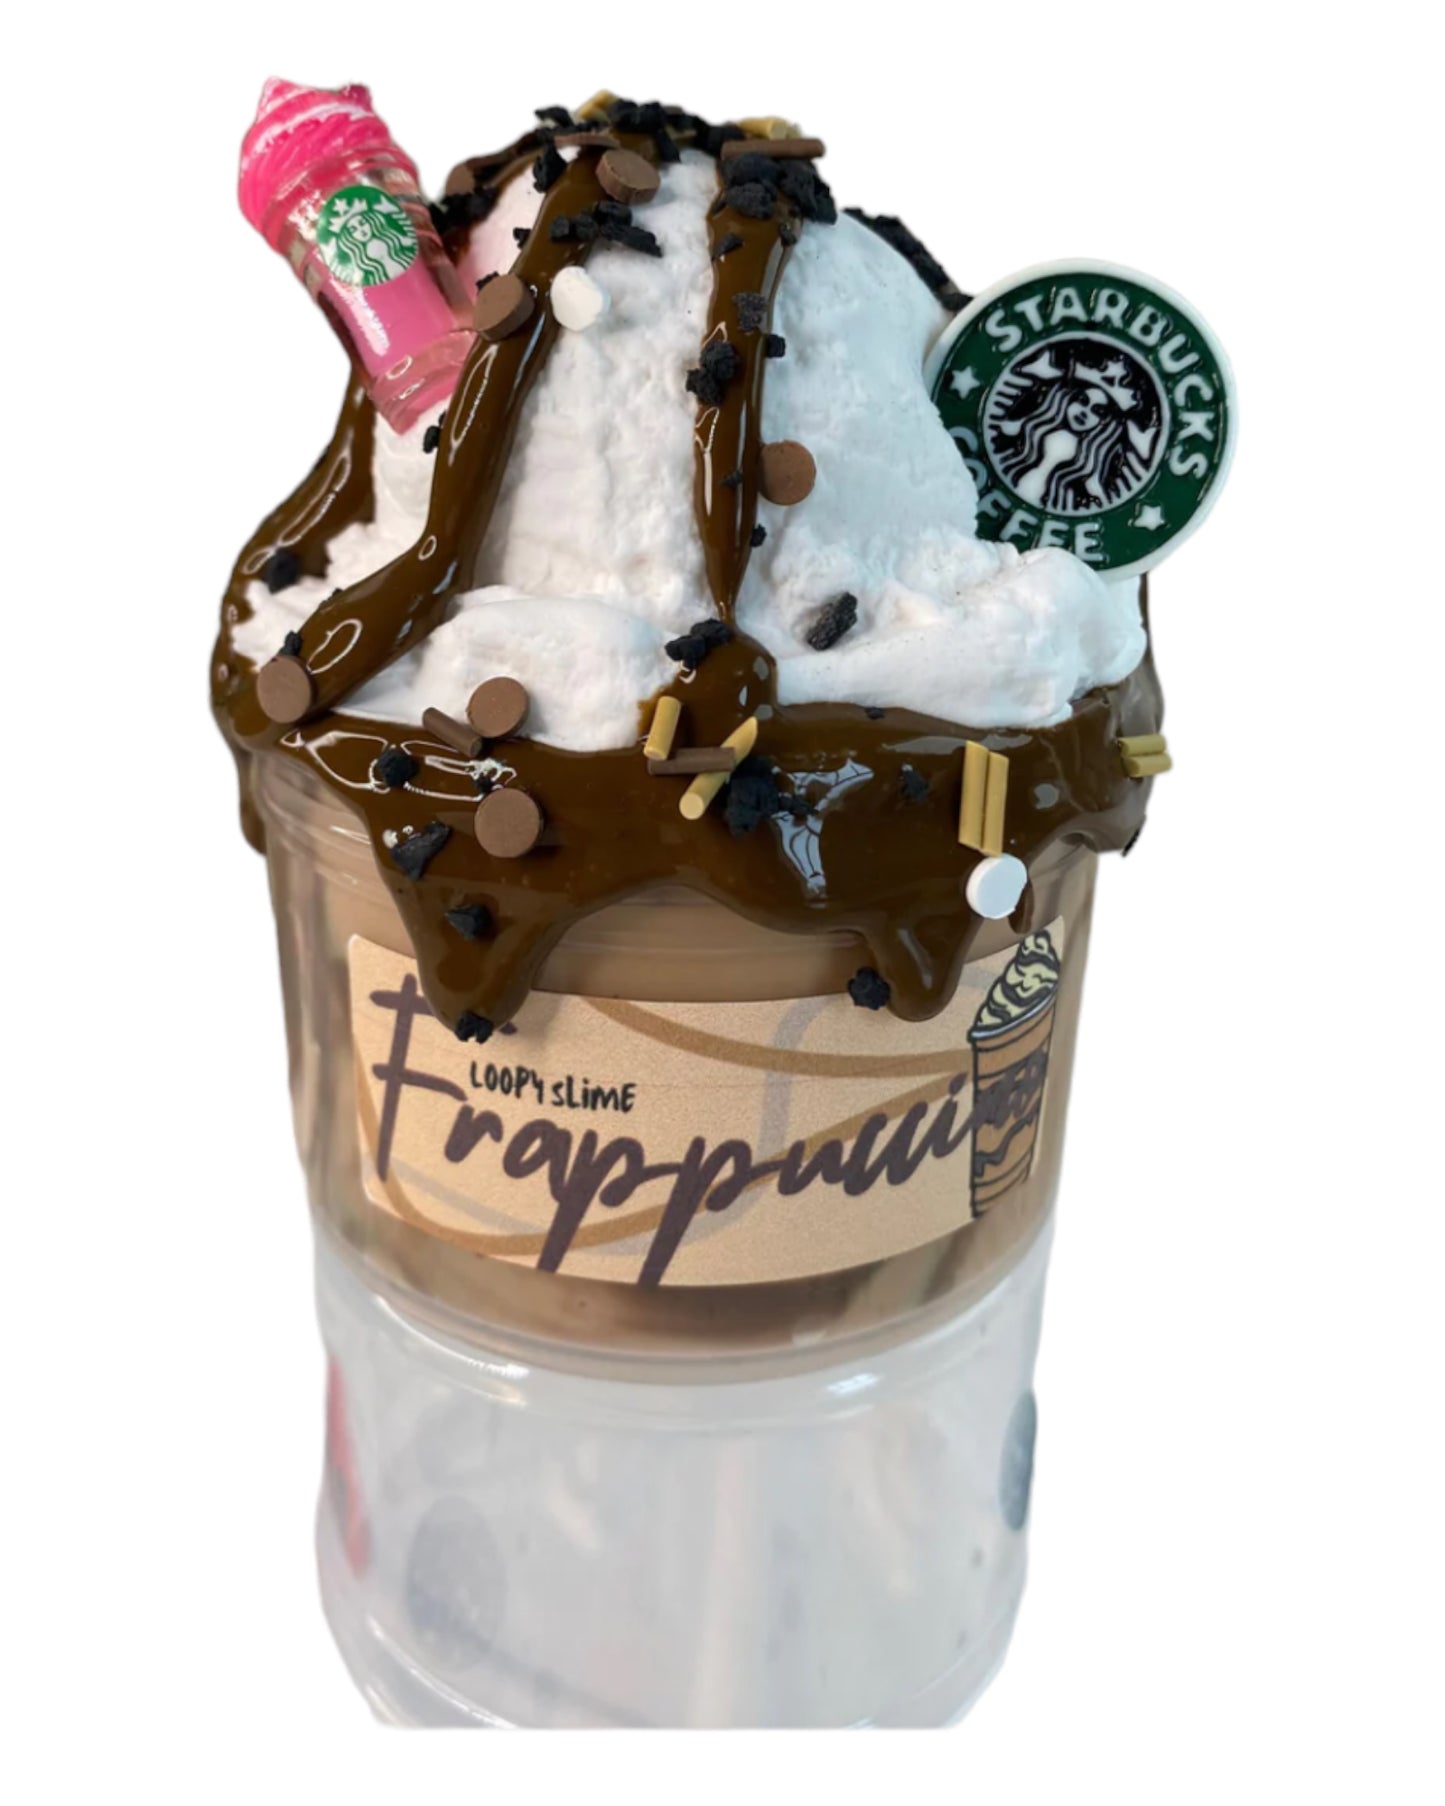 Starbucks Frappuccino Slime kit